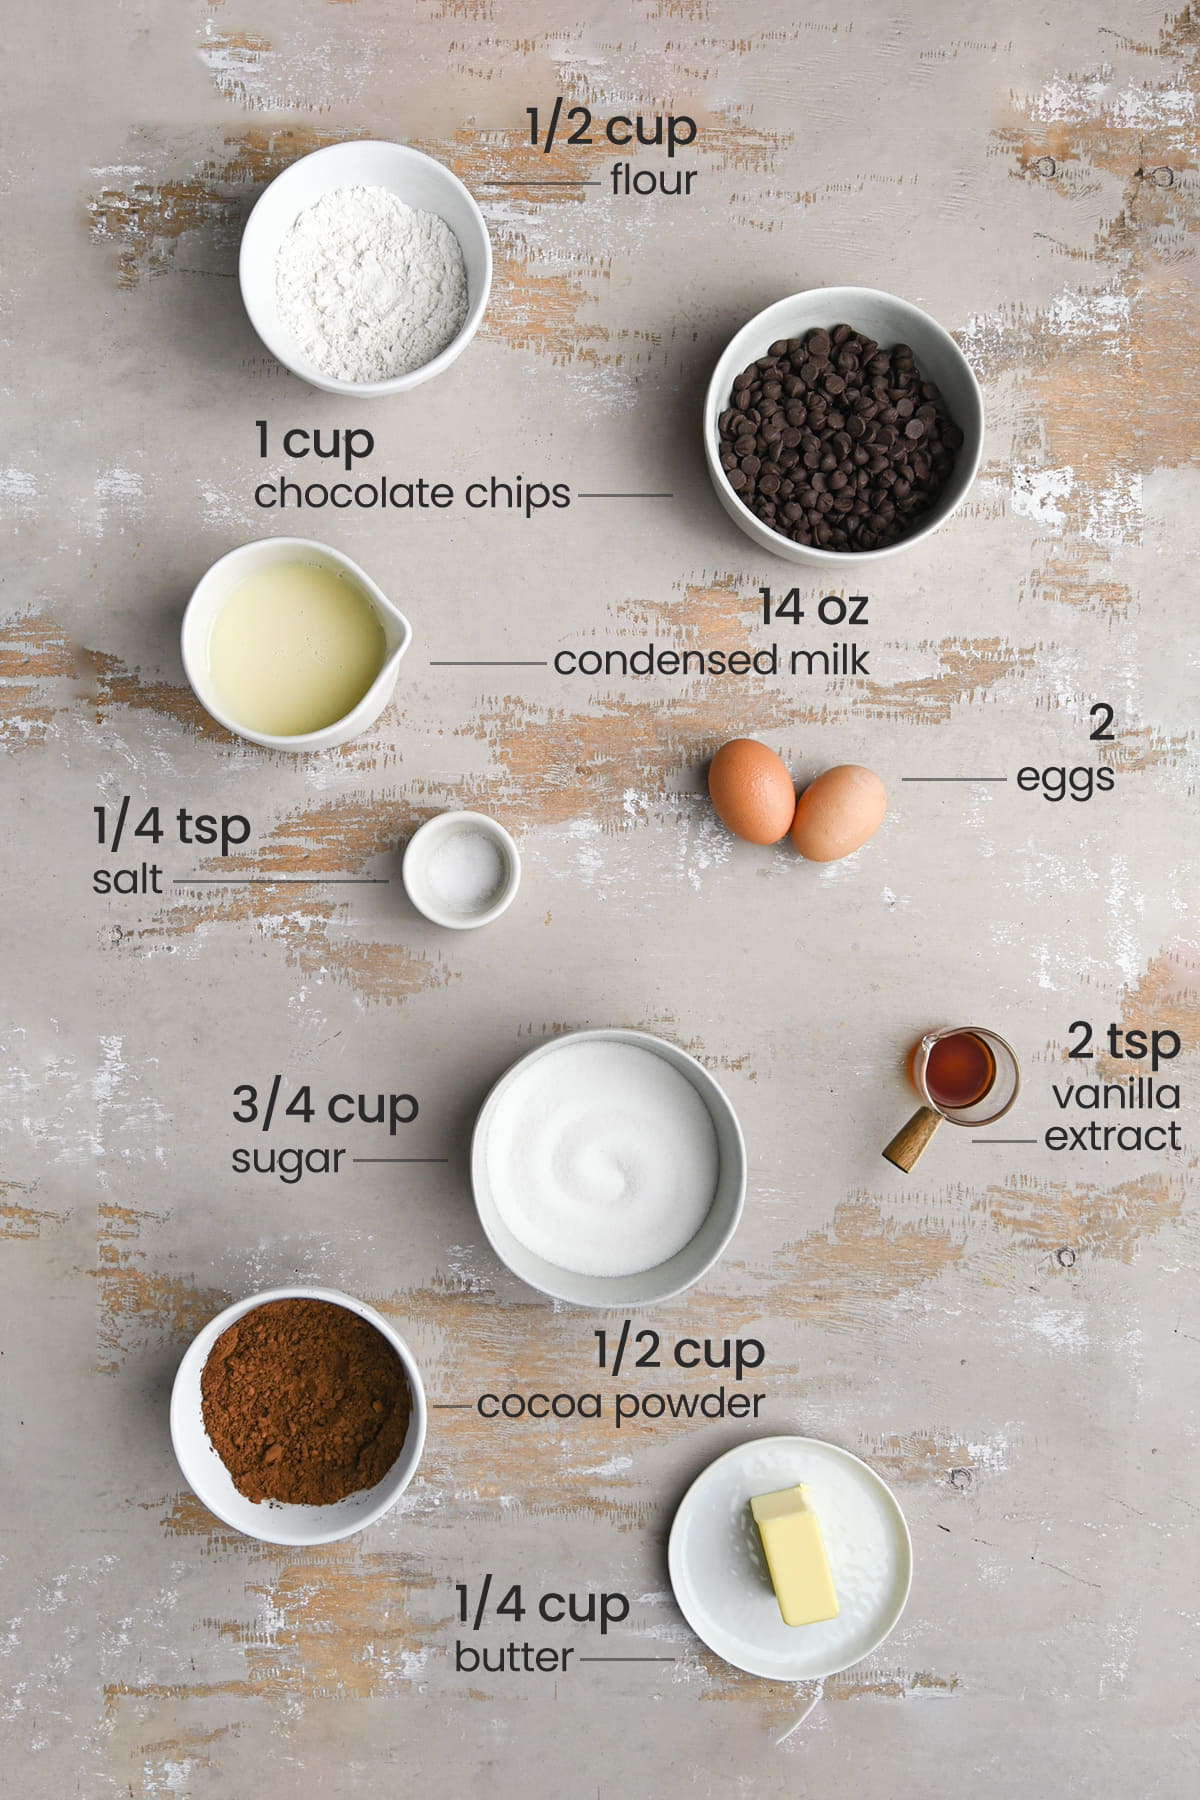 ingredients for condensed milk brownies - flour, chocolate chips, condensed milk, salt, eggs, sugar, vanilla extract, cocoa powder, butter